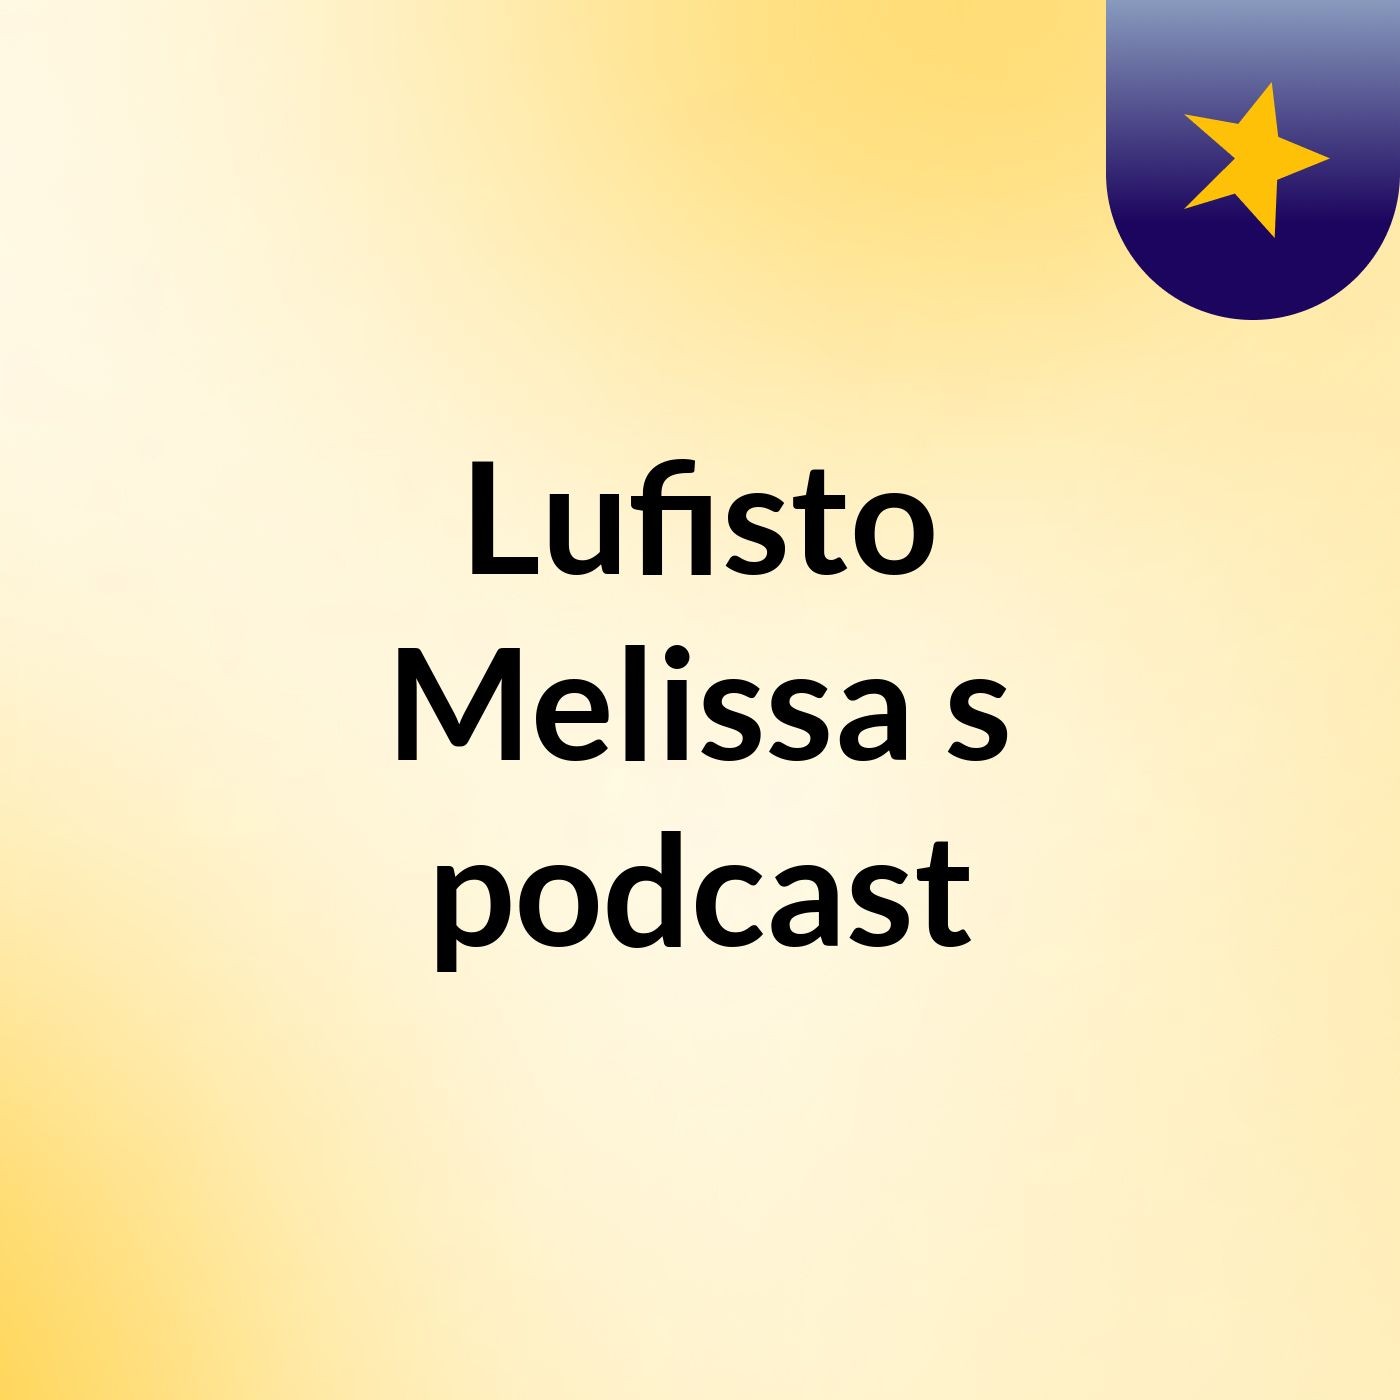 Episode 2 - Lufisto Melissa's podcast